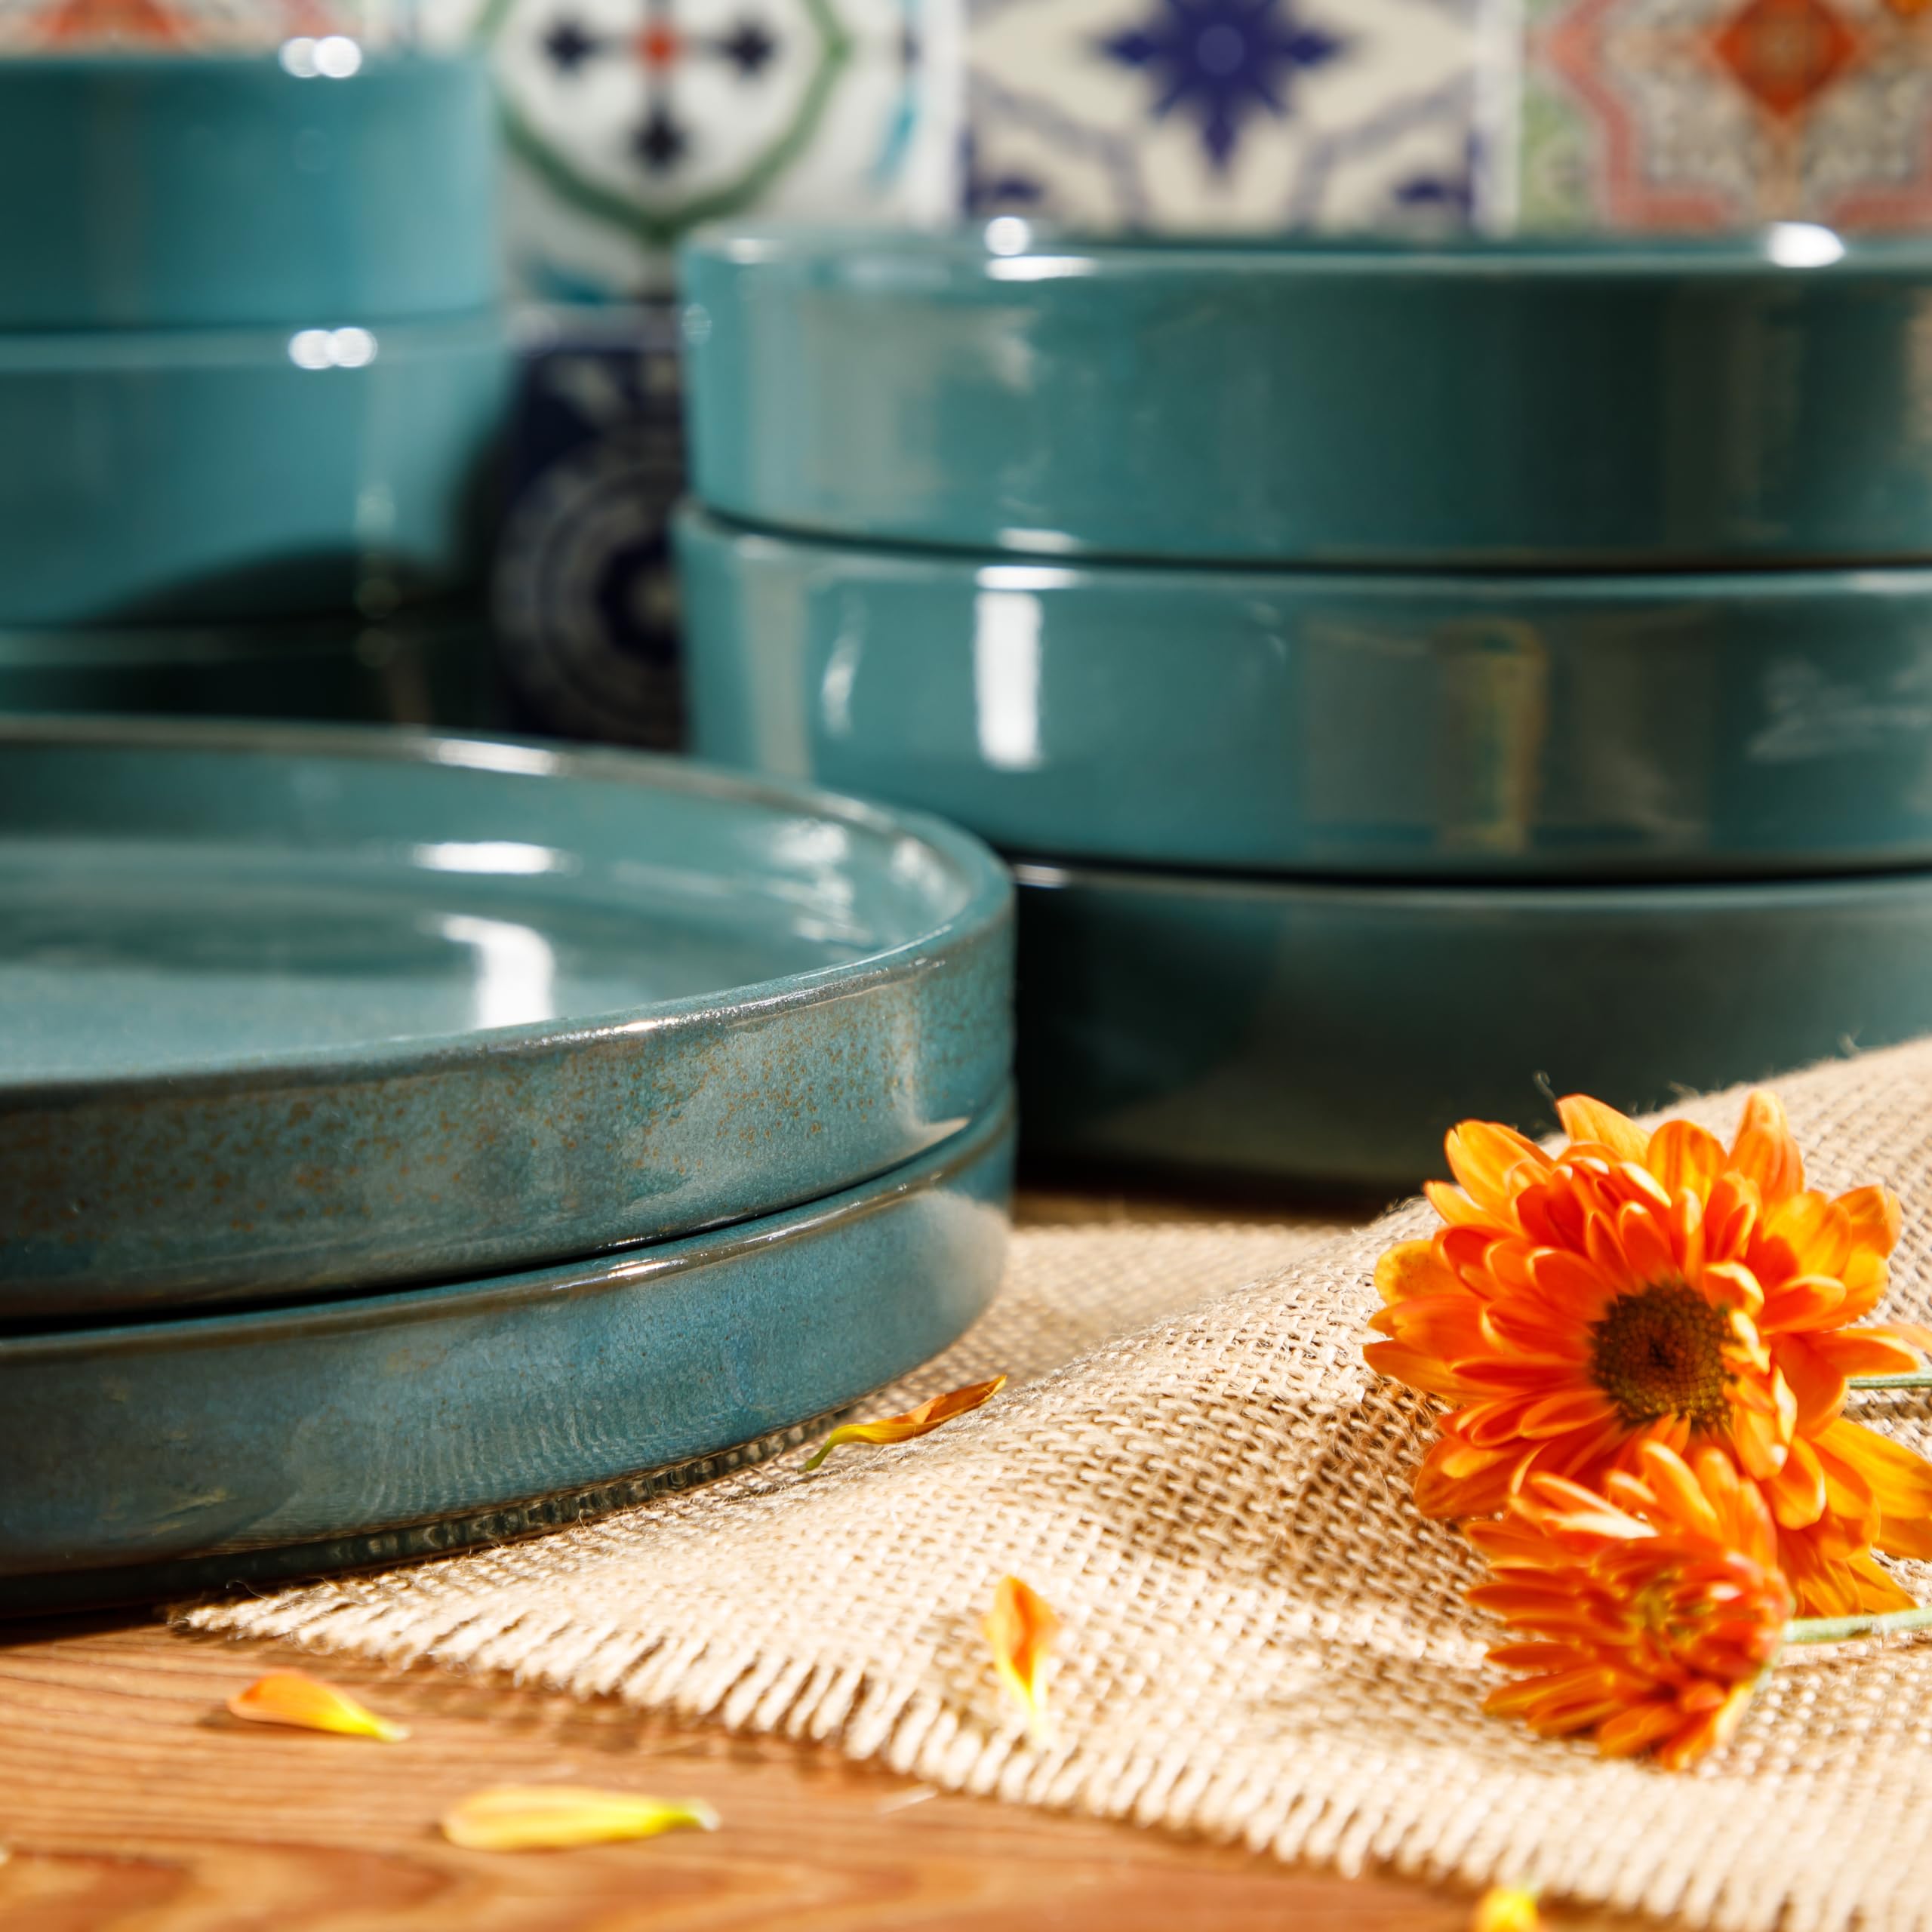 Bloomhouse - Oprah's Favorite Things - Santorini Mist Double Bowl Terracotta Reactive Glaze Plates and Bowls Dinnerware Set - Jade Blue Green, Service for Four (16pcs)